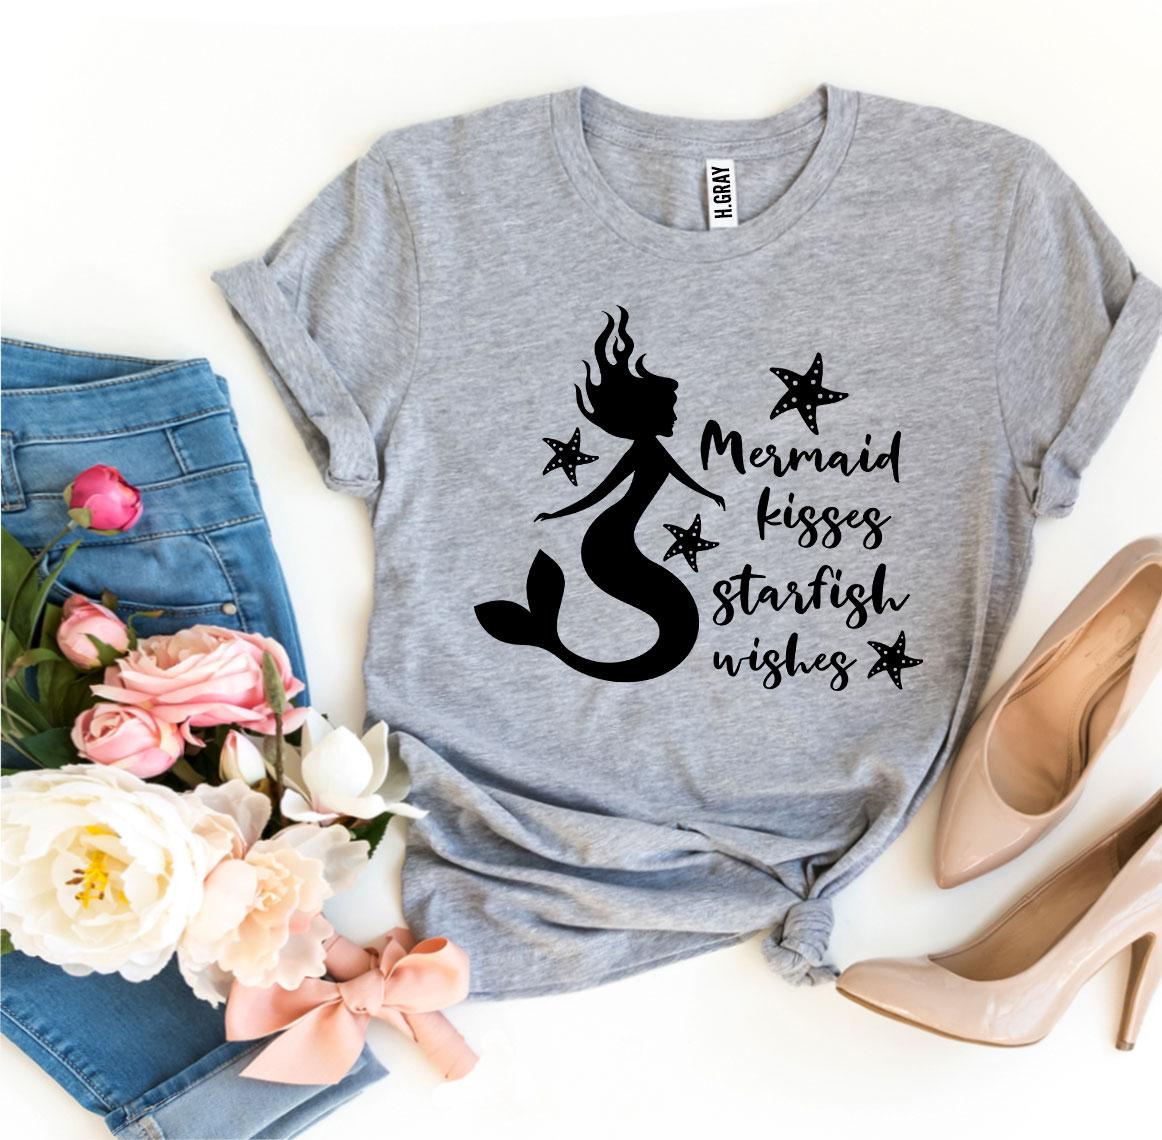 Mermaid Kisses Starfish Wishes T-shirt | Agate